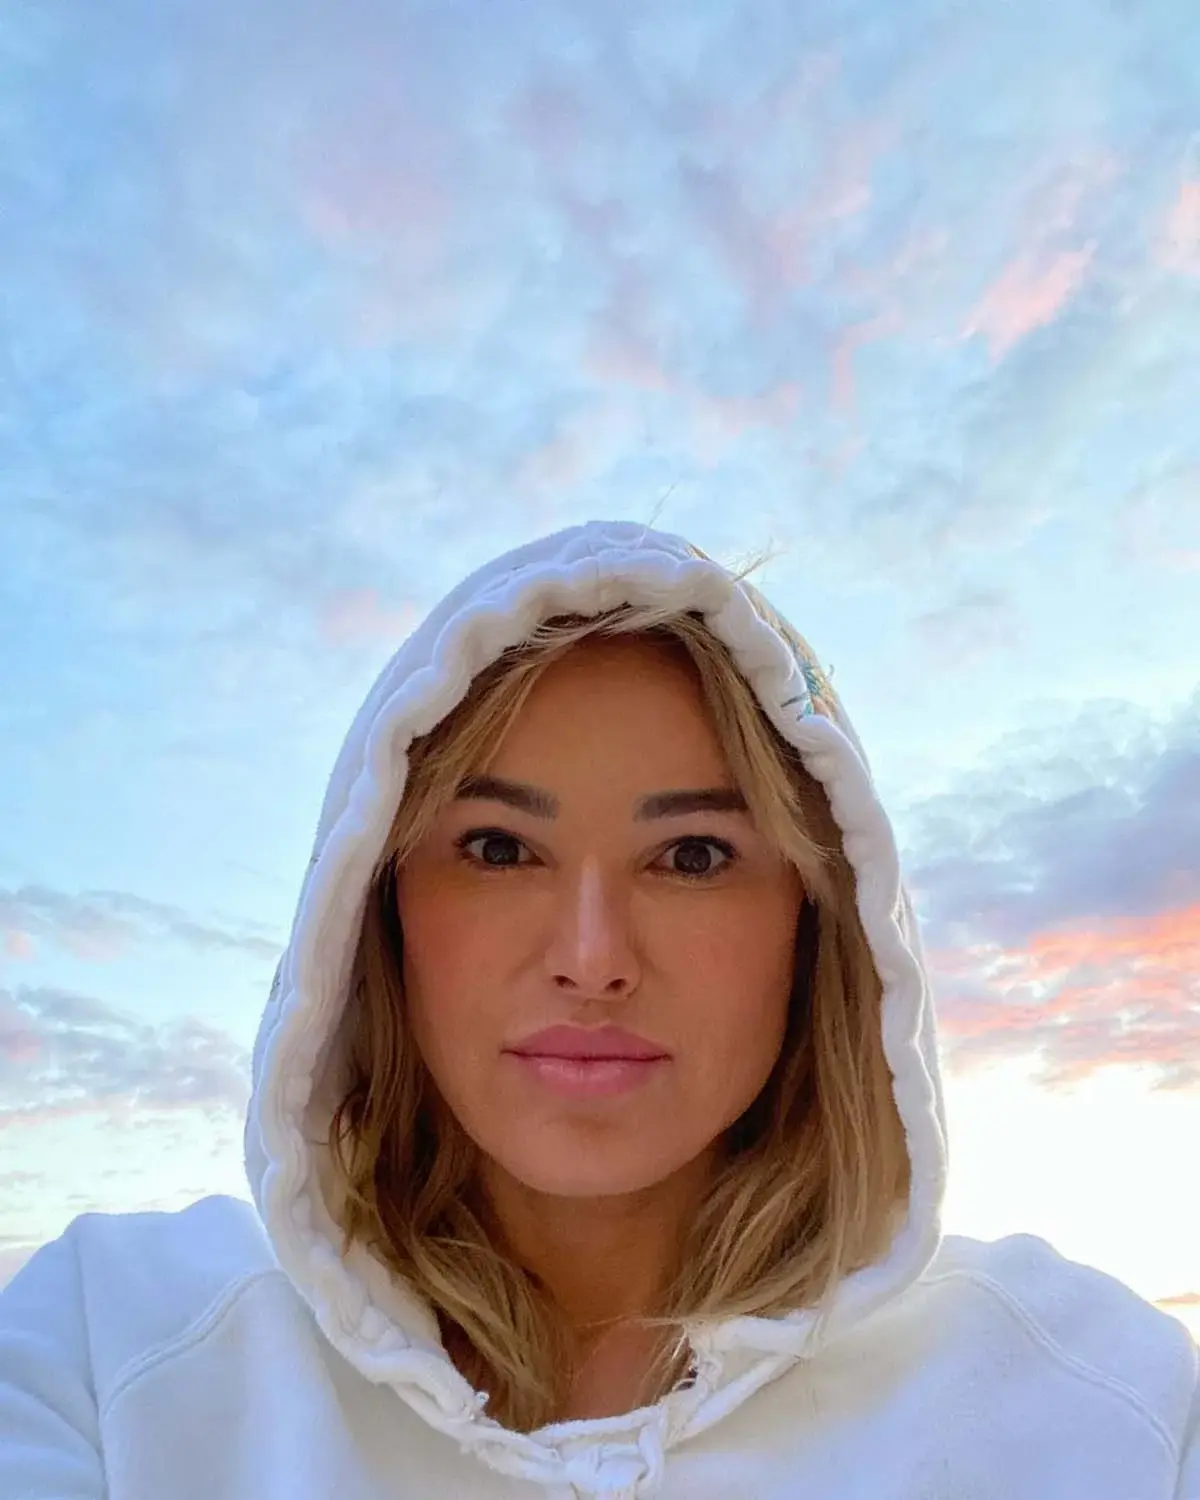 woman looking down at camera wearing a hoodie